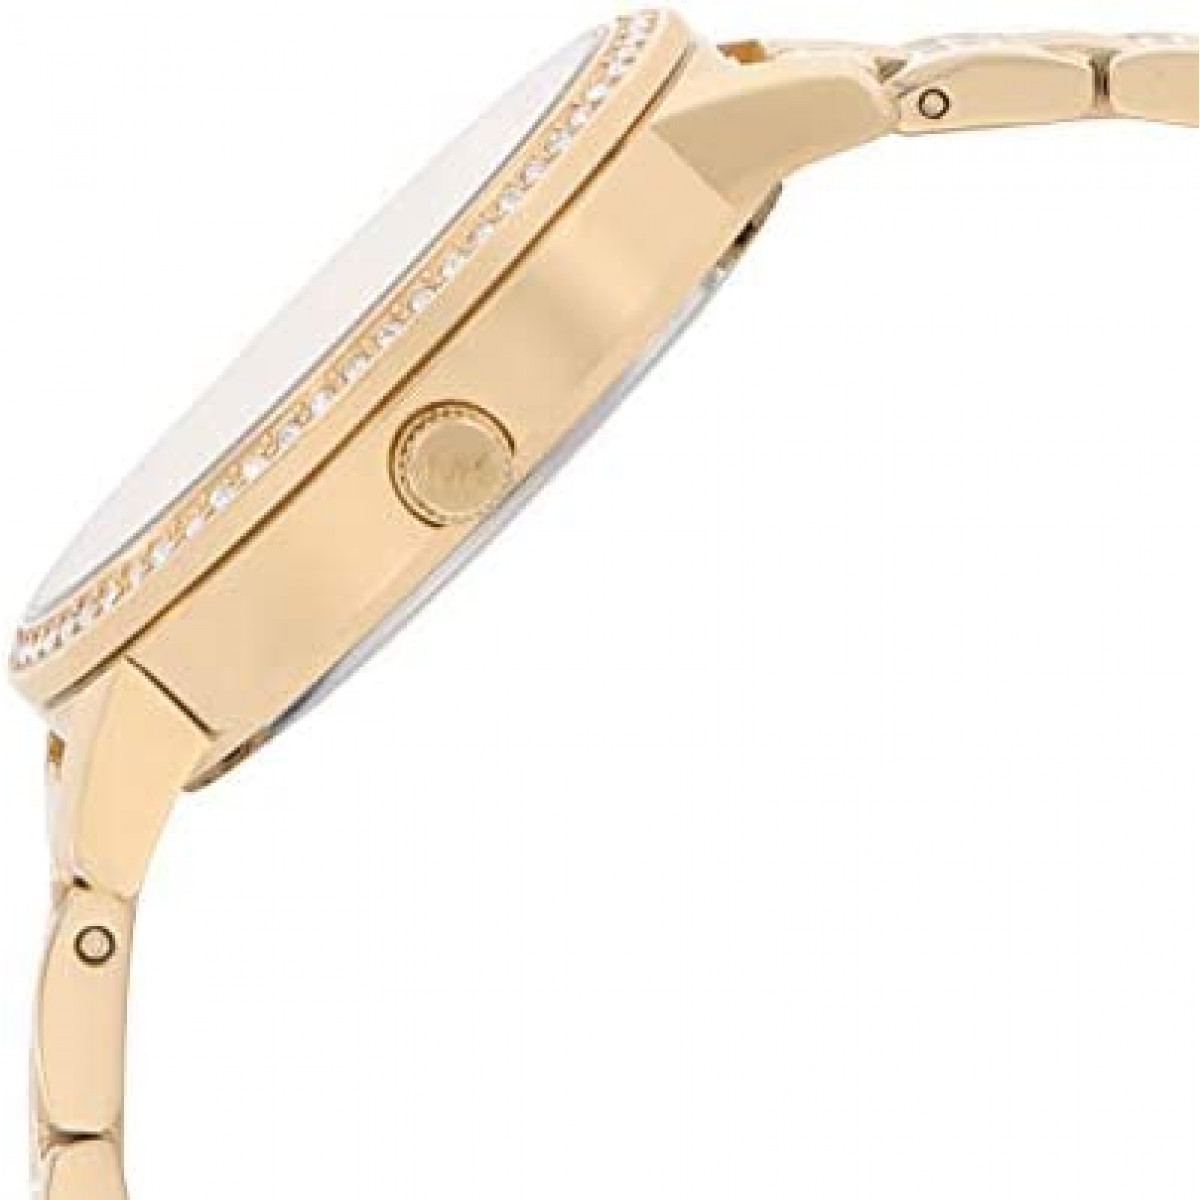 Michael Kors Women's Melissa Three-Hand Gold-Tone Stainless Steel Watch